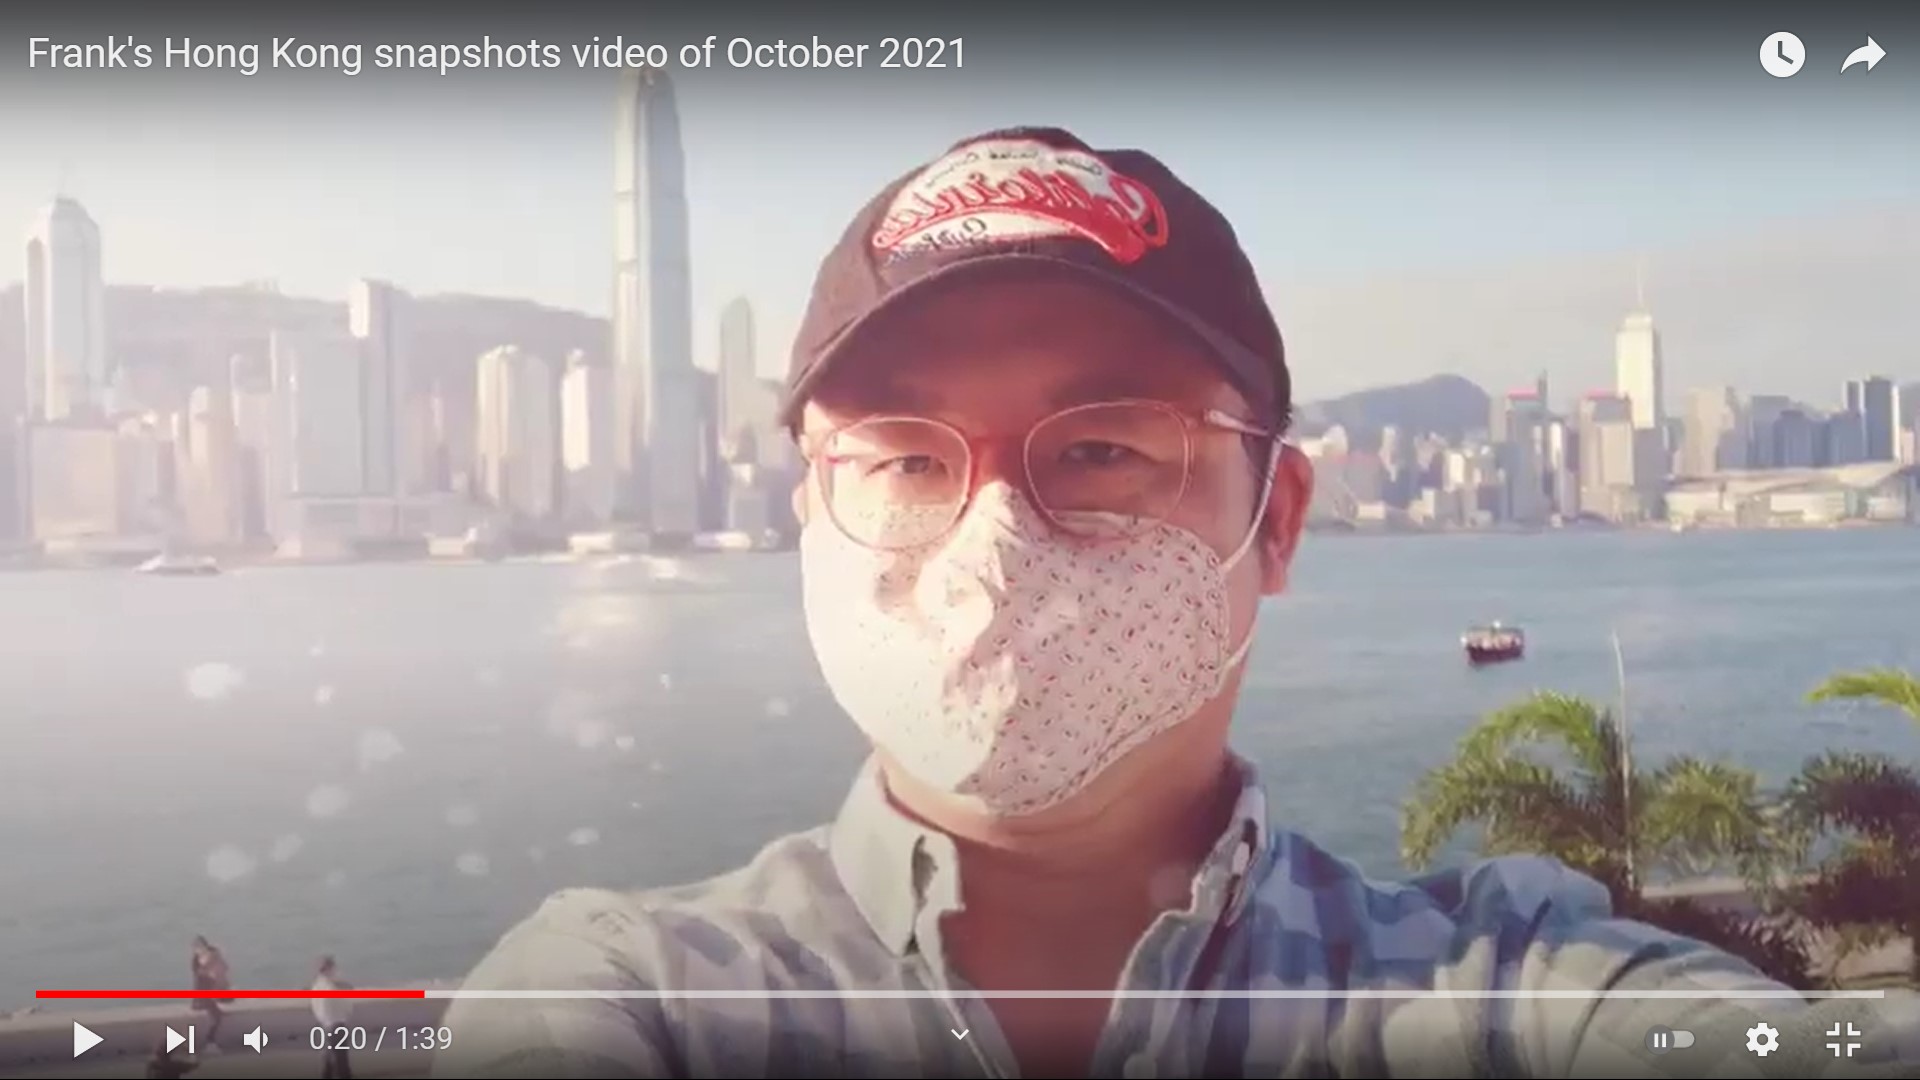 Hong Kong snapshots of October 2021 in Frank’s video